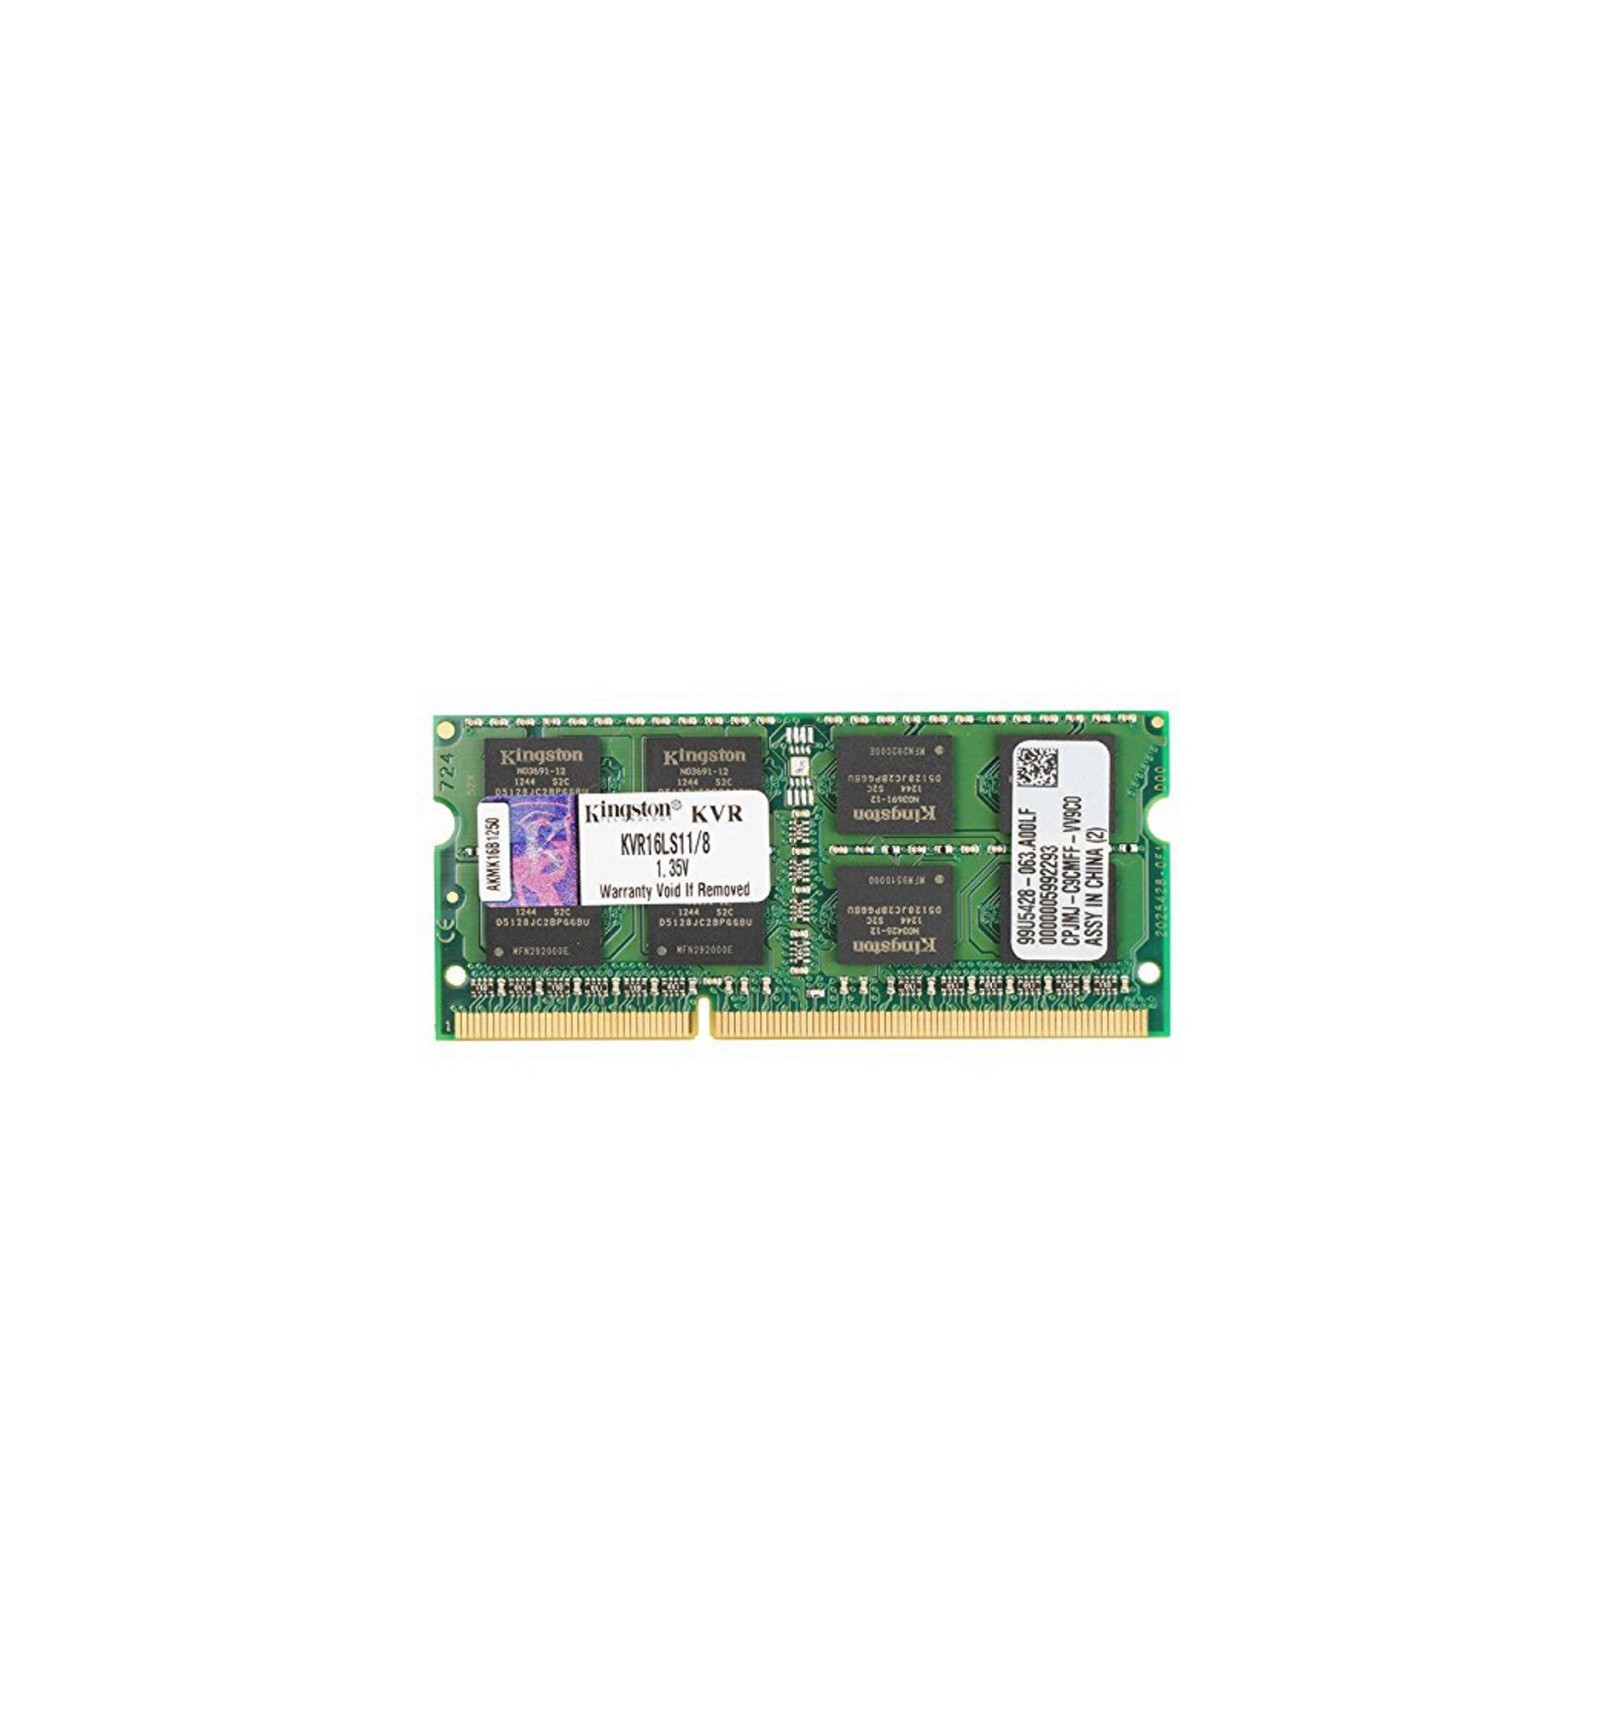 Comprar memoria RAM 8GB 1600Mhz - Red Computer